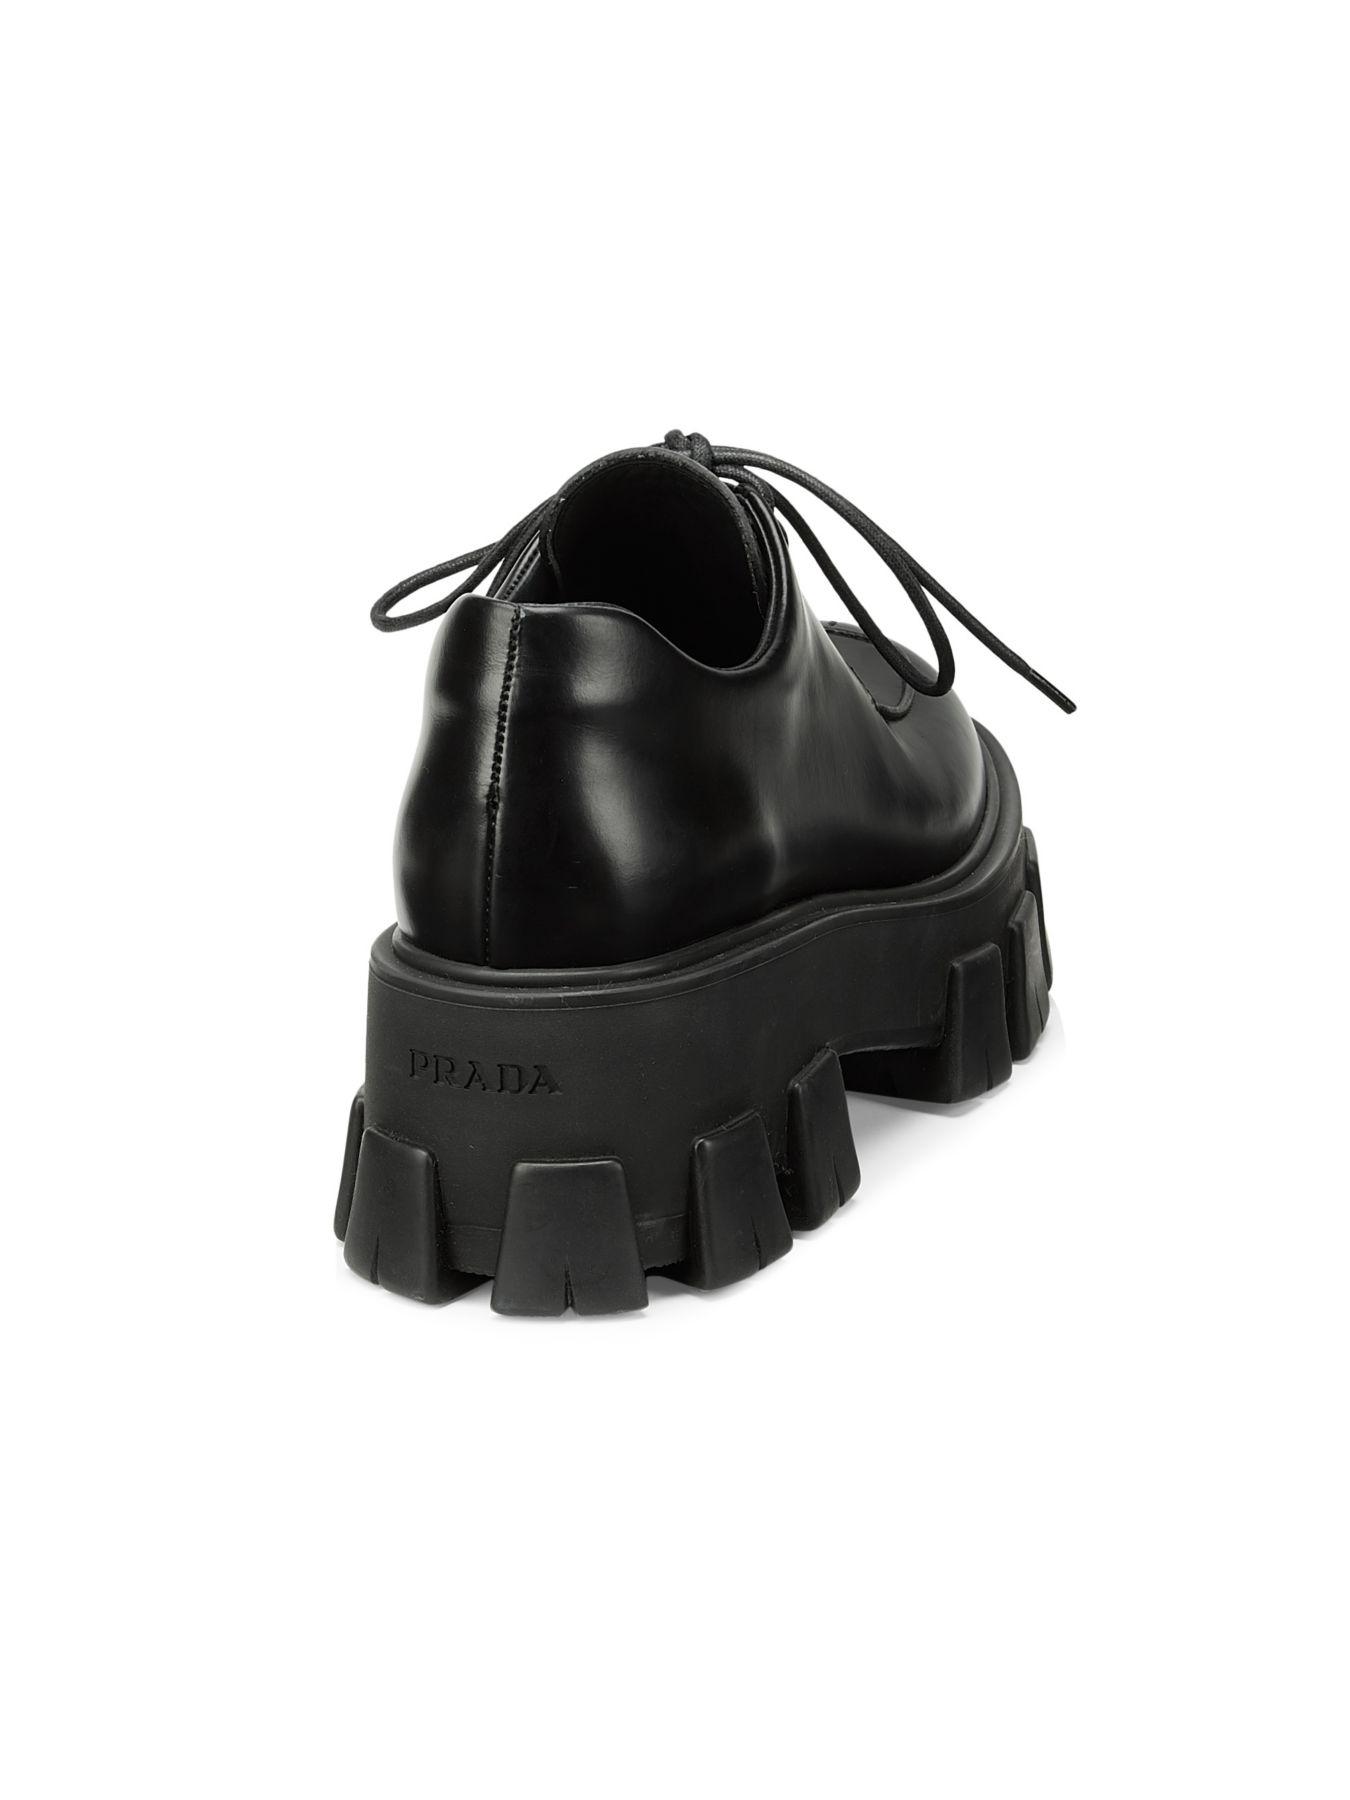 Prada Lug-sole Polished Leather Creepers in Black - Lyst